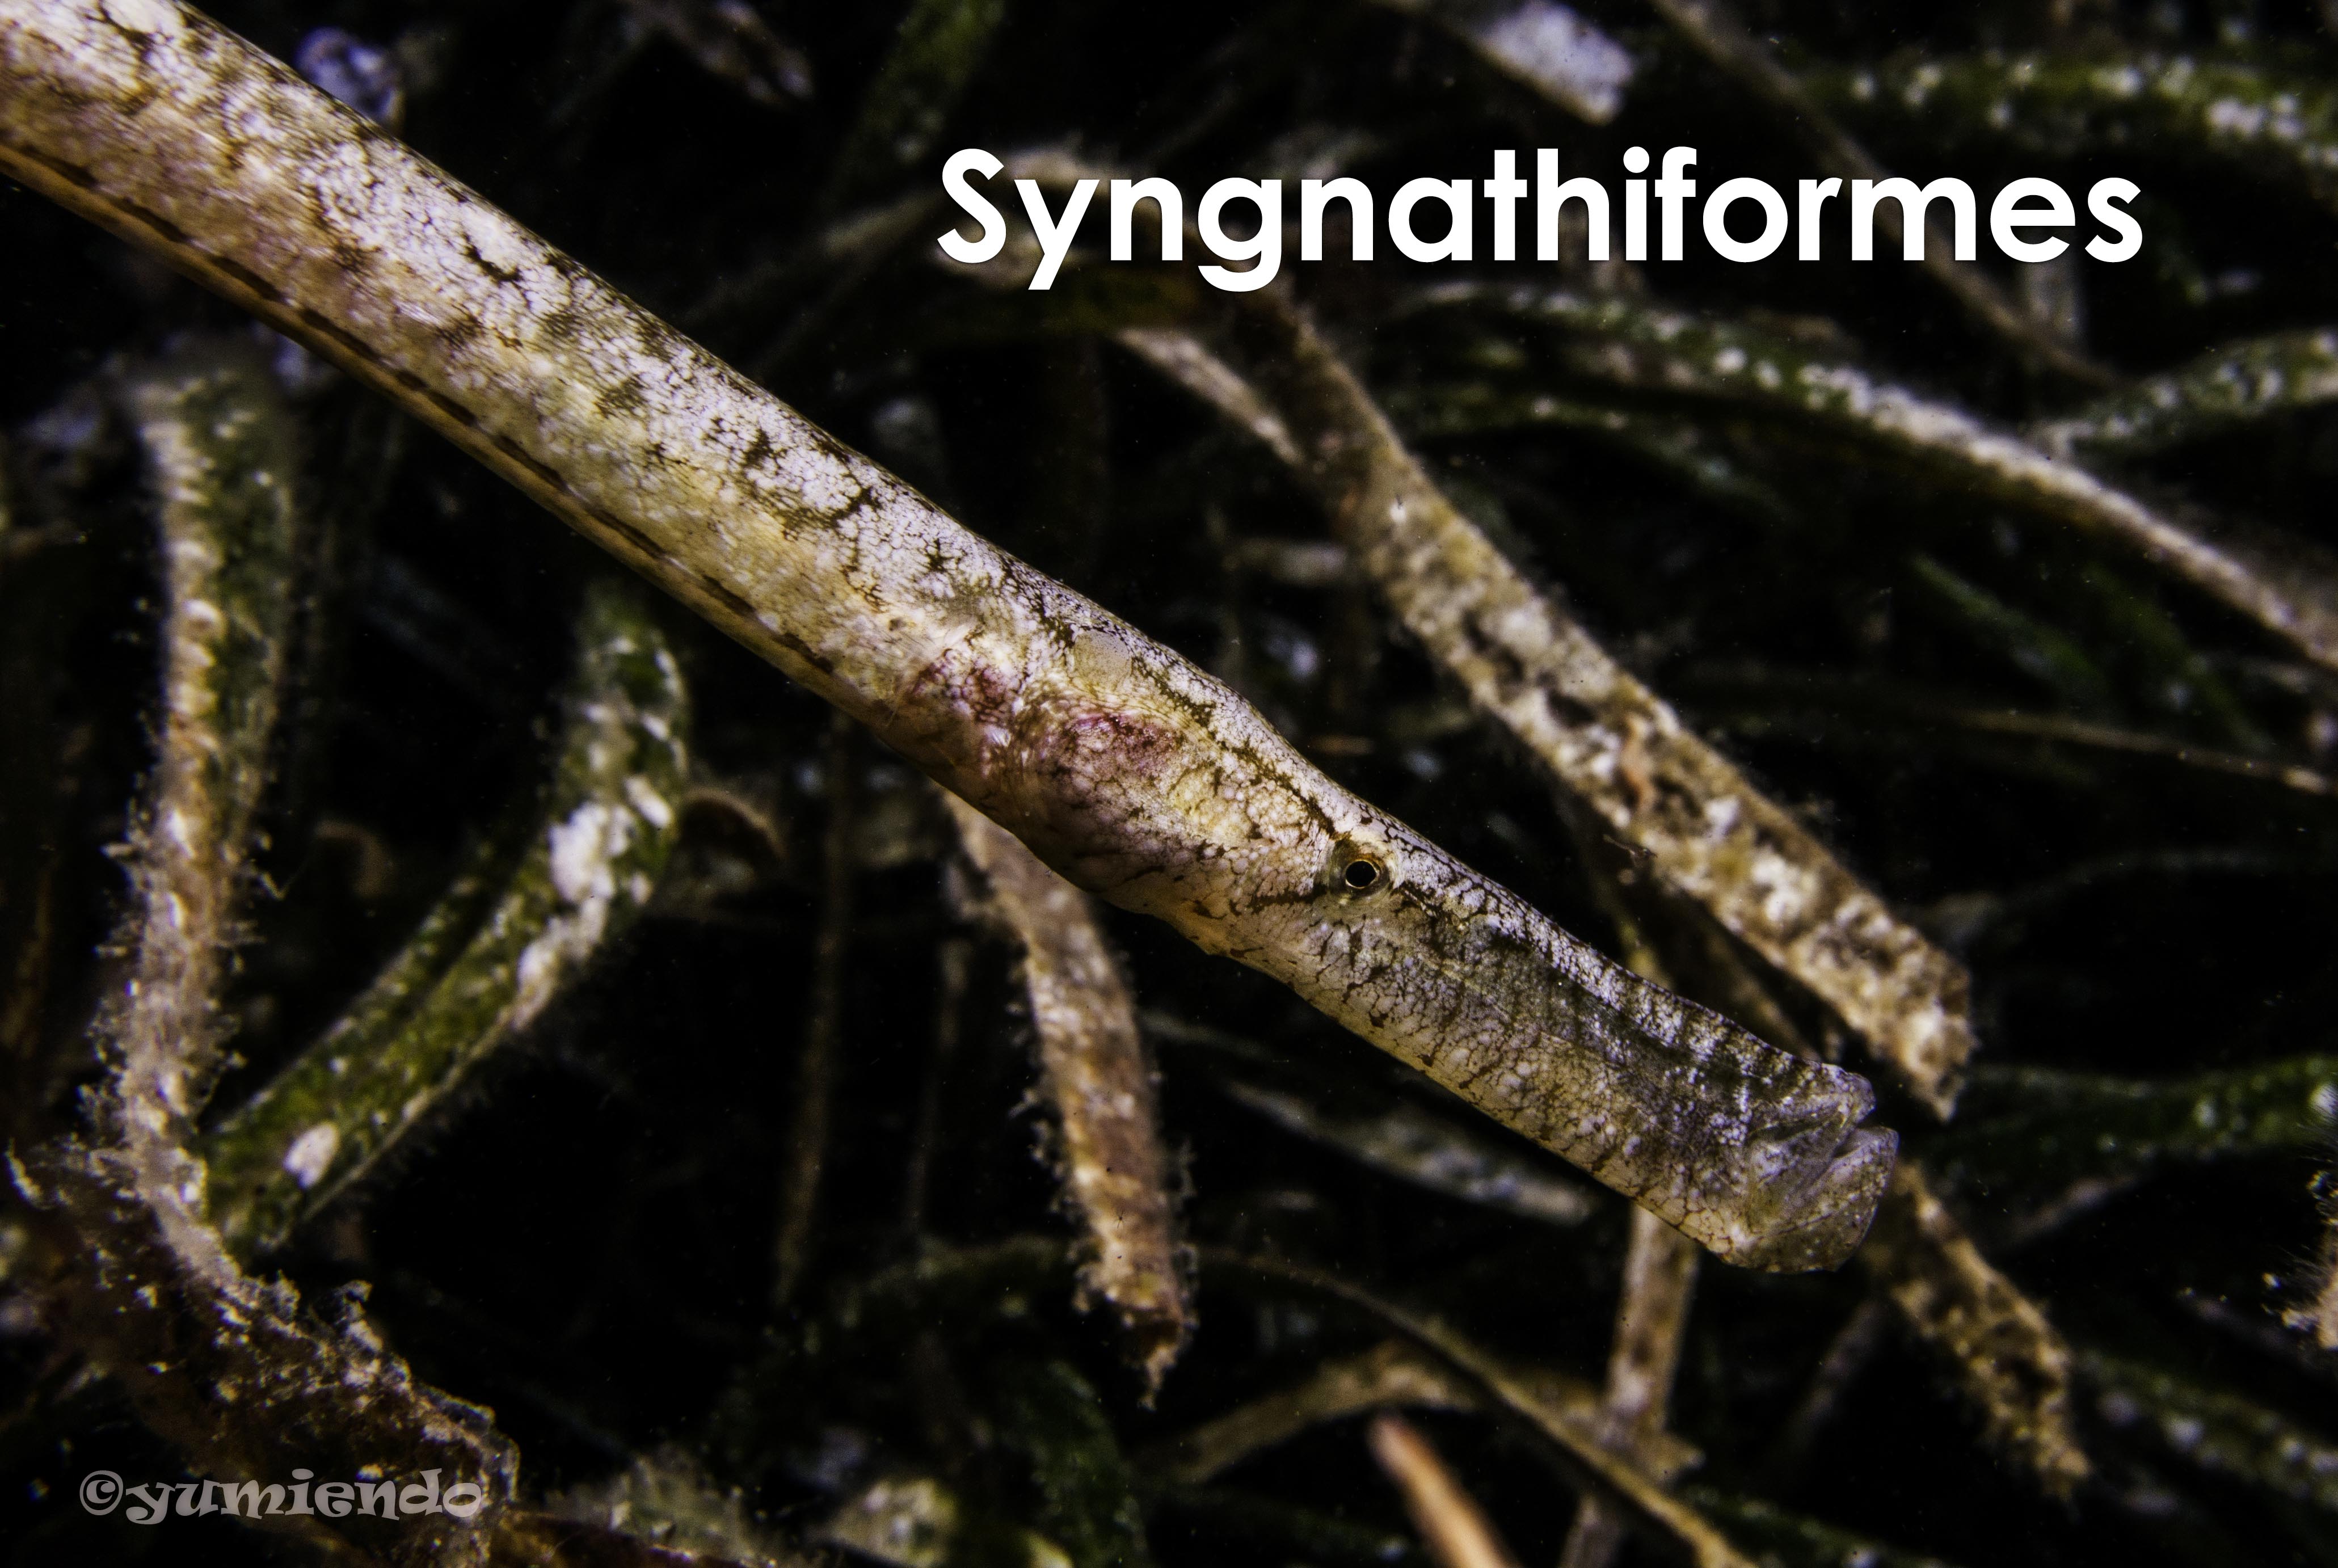 Syngnathiformes